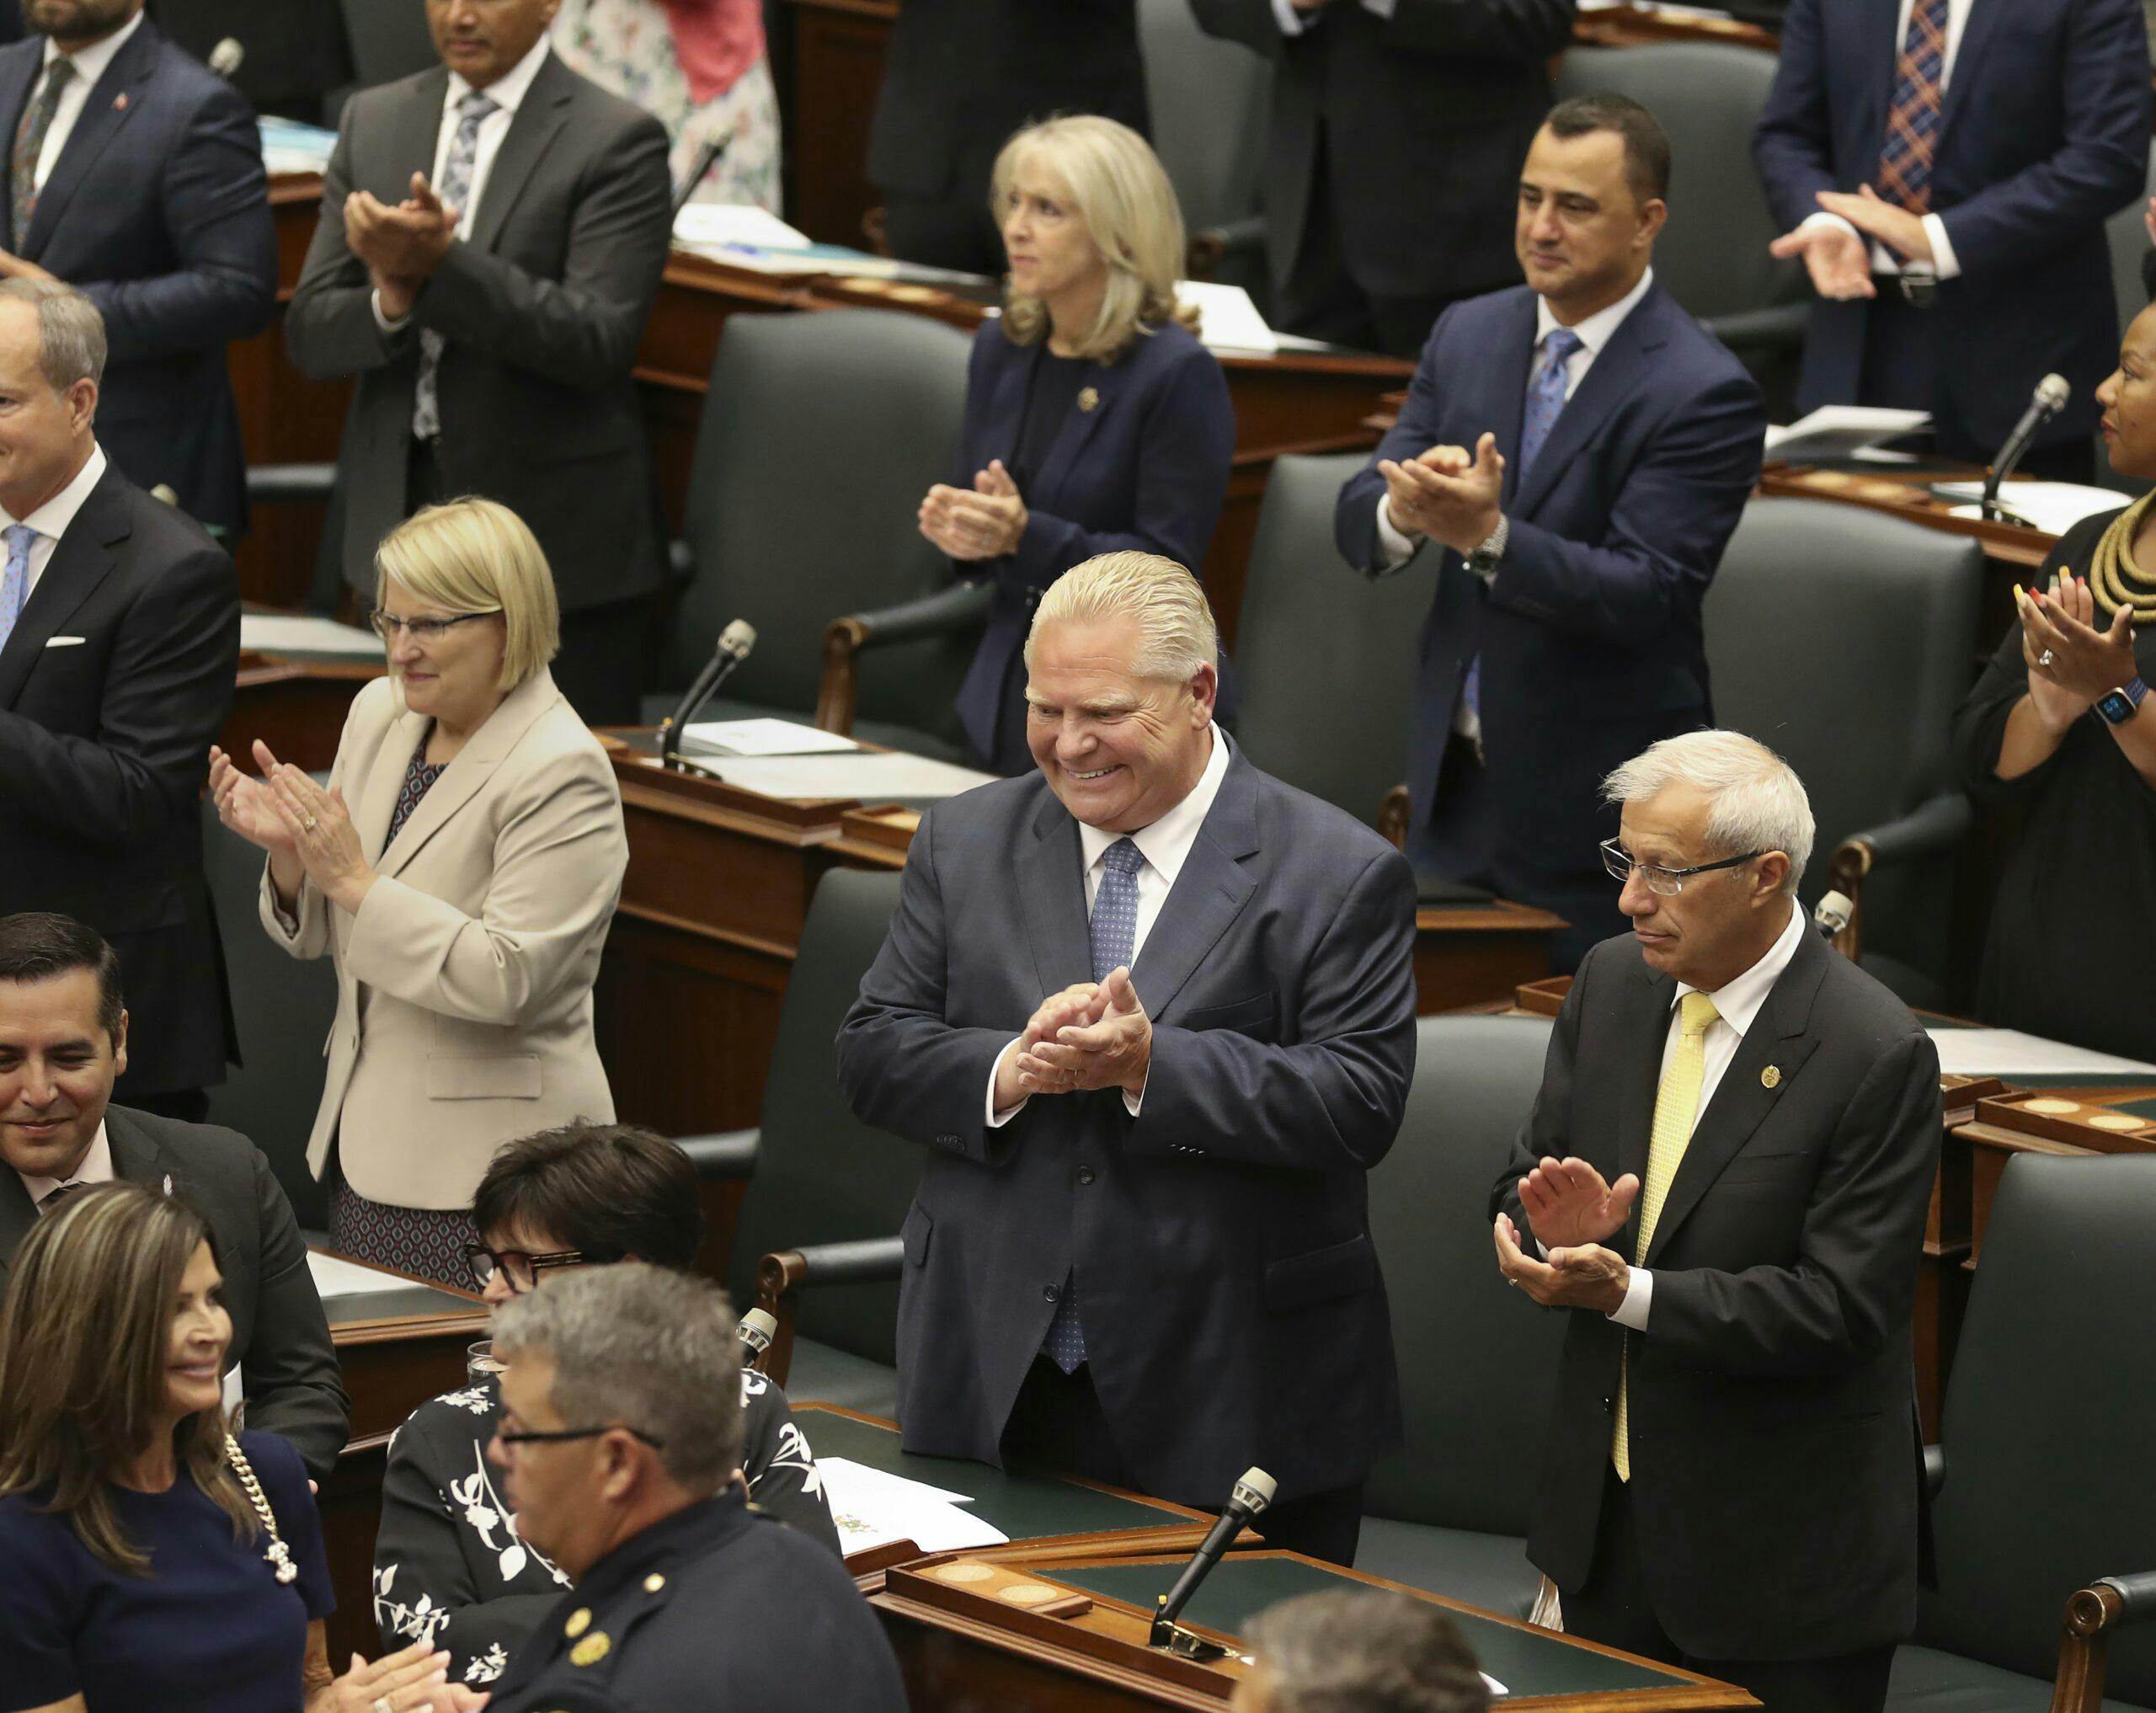 Bills next week: PCs aim to finalize Toronto, Ottawa mayors’ ‘strong’ powers